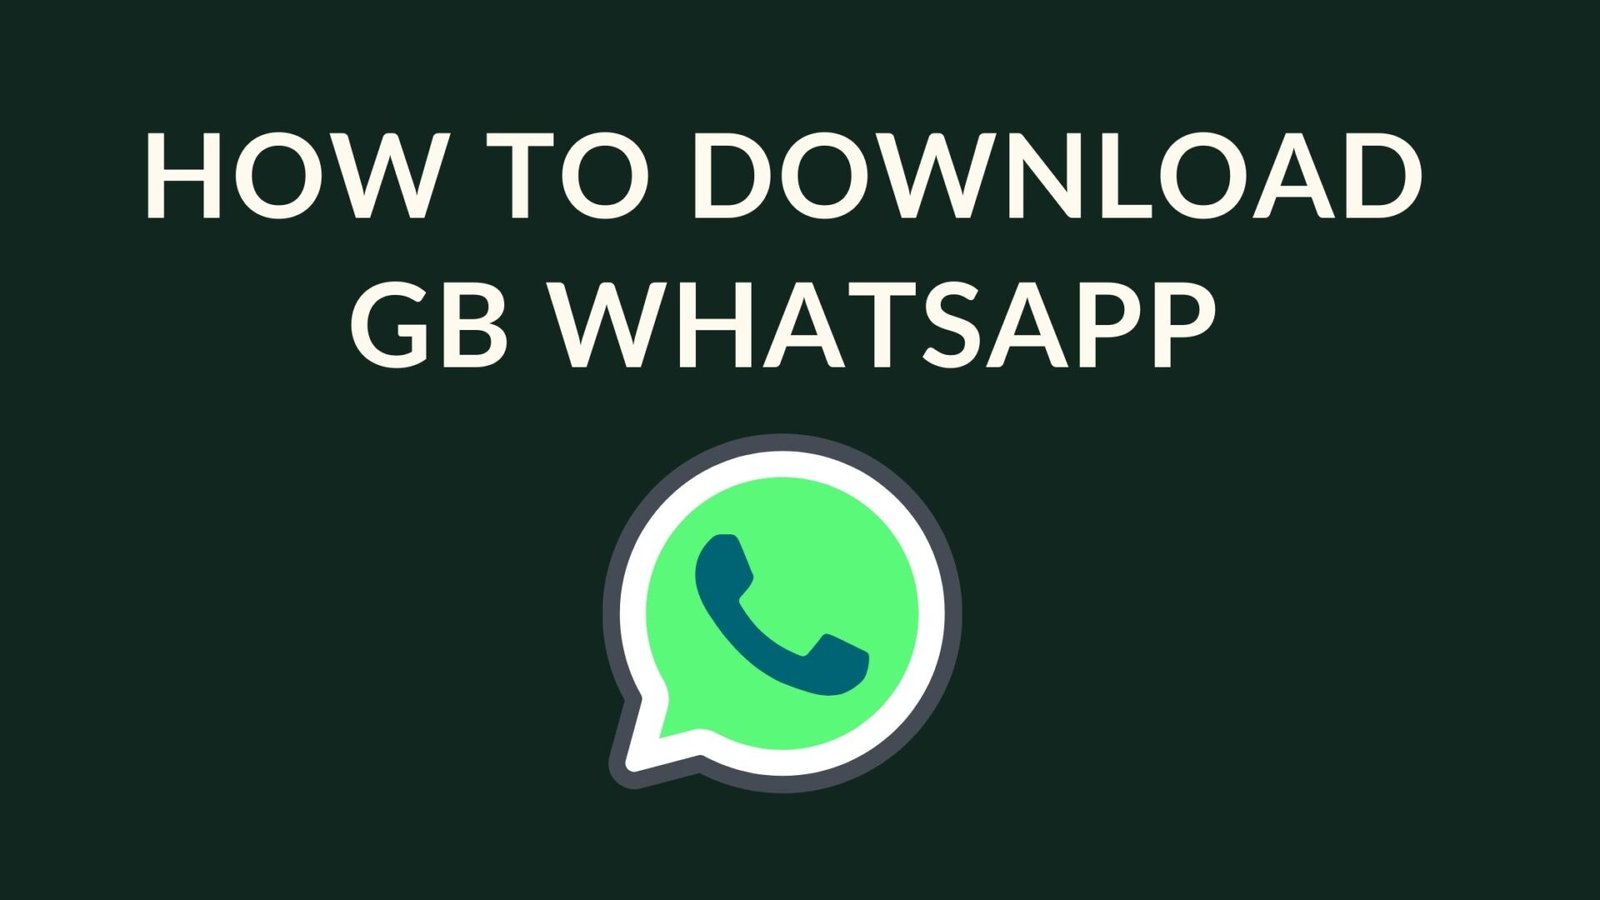 gb whatsapp ios download 2021